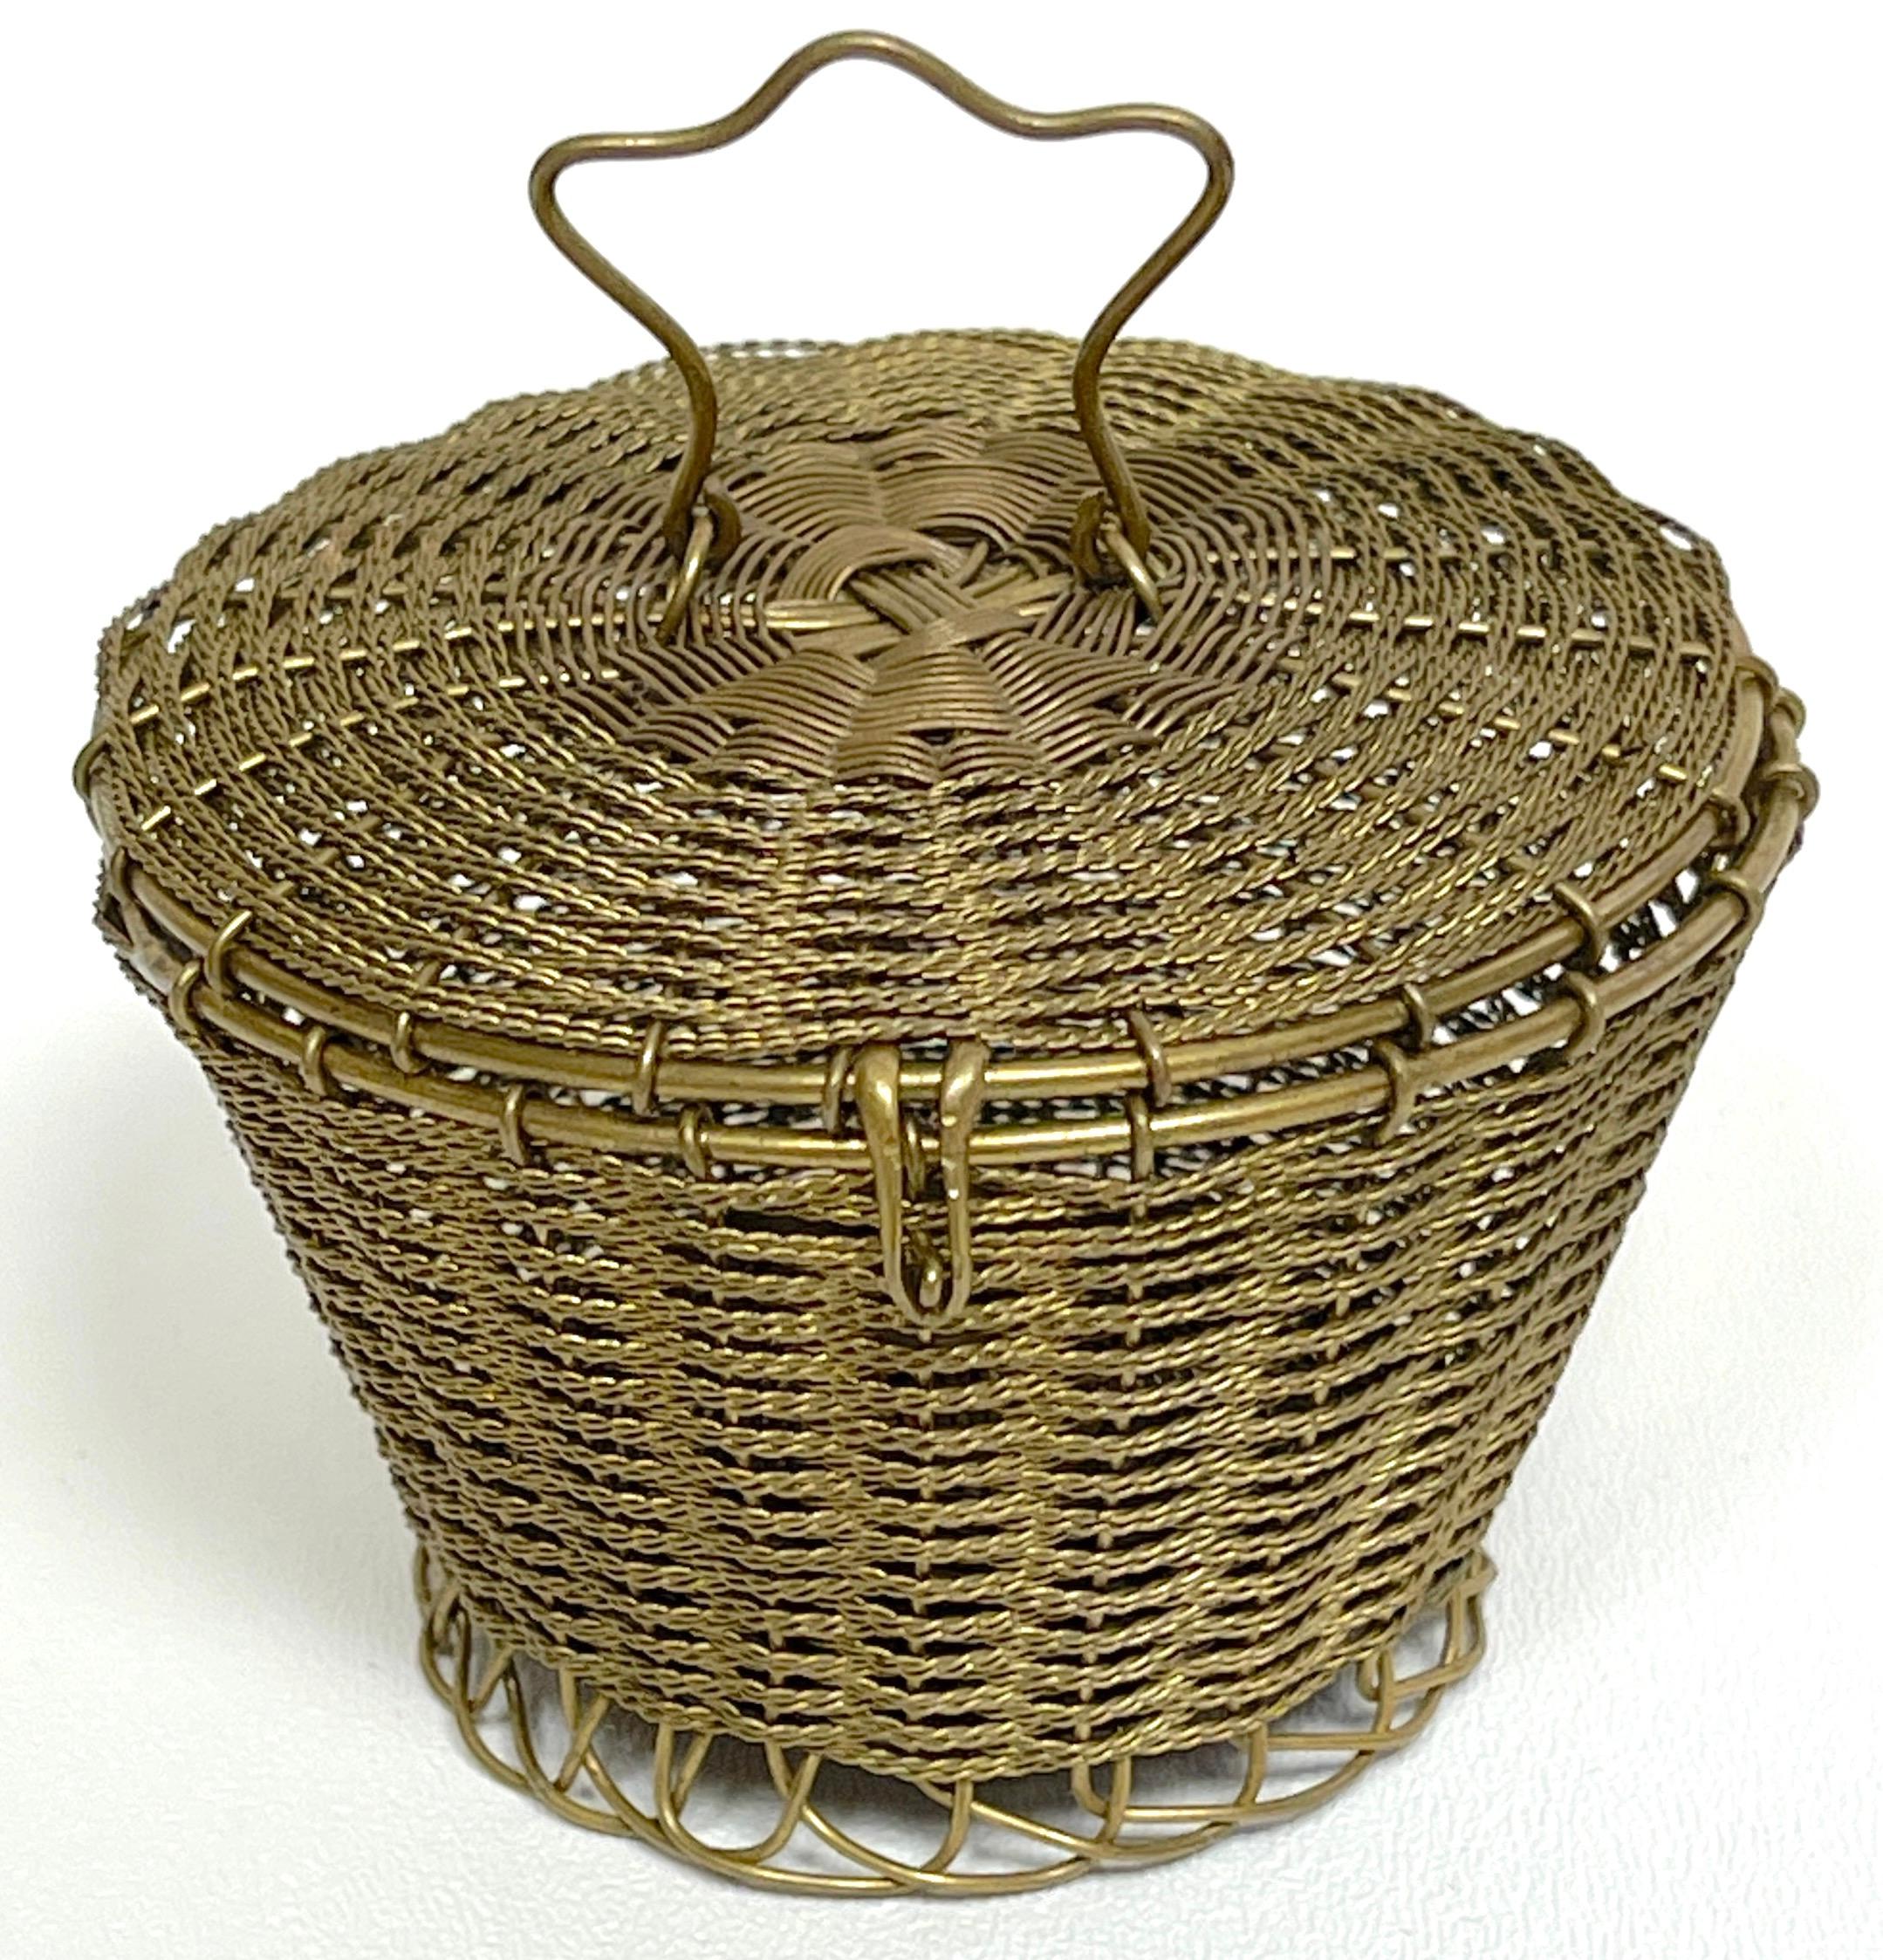 Napoleon III woven gilt bronze handled basket -weave table box 
France, circa 1875

A whimsical, yet intricately woven of a handled basket weave table box.

